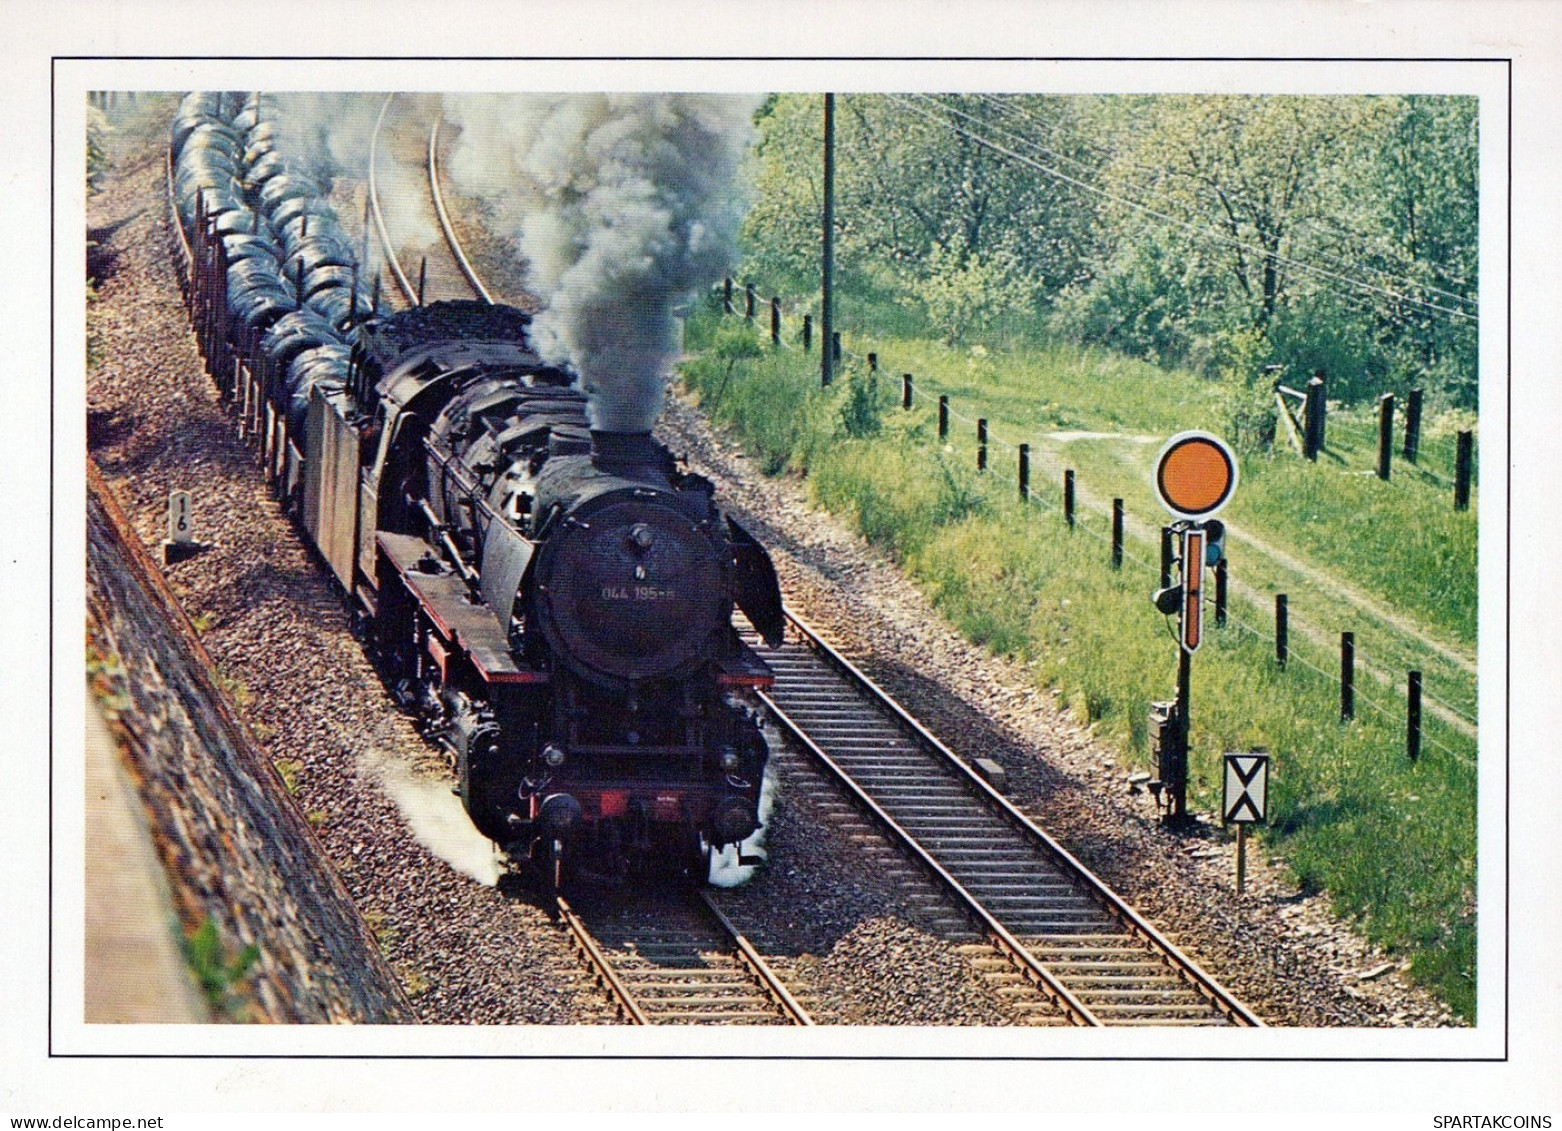 TRAIN RAILWAY Transport Vintage Postcard CPSM #PAA840.A - Treni